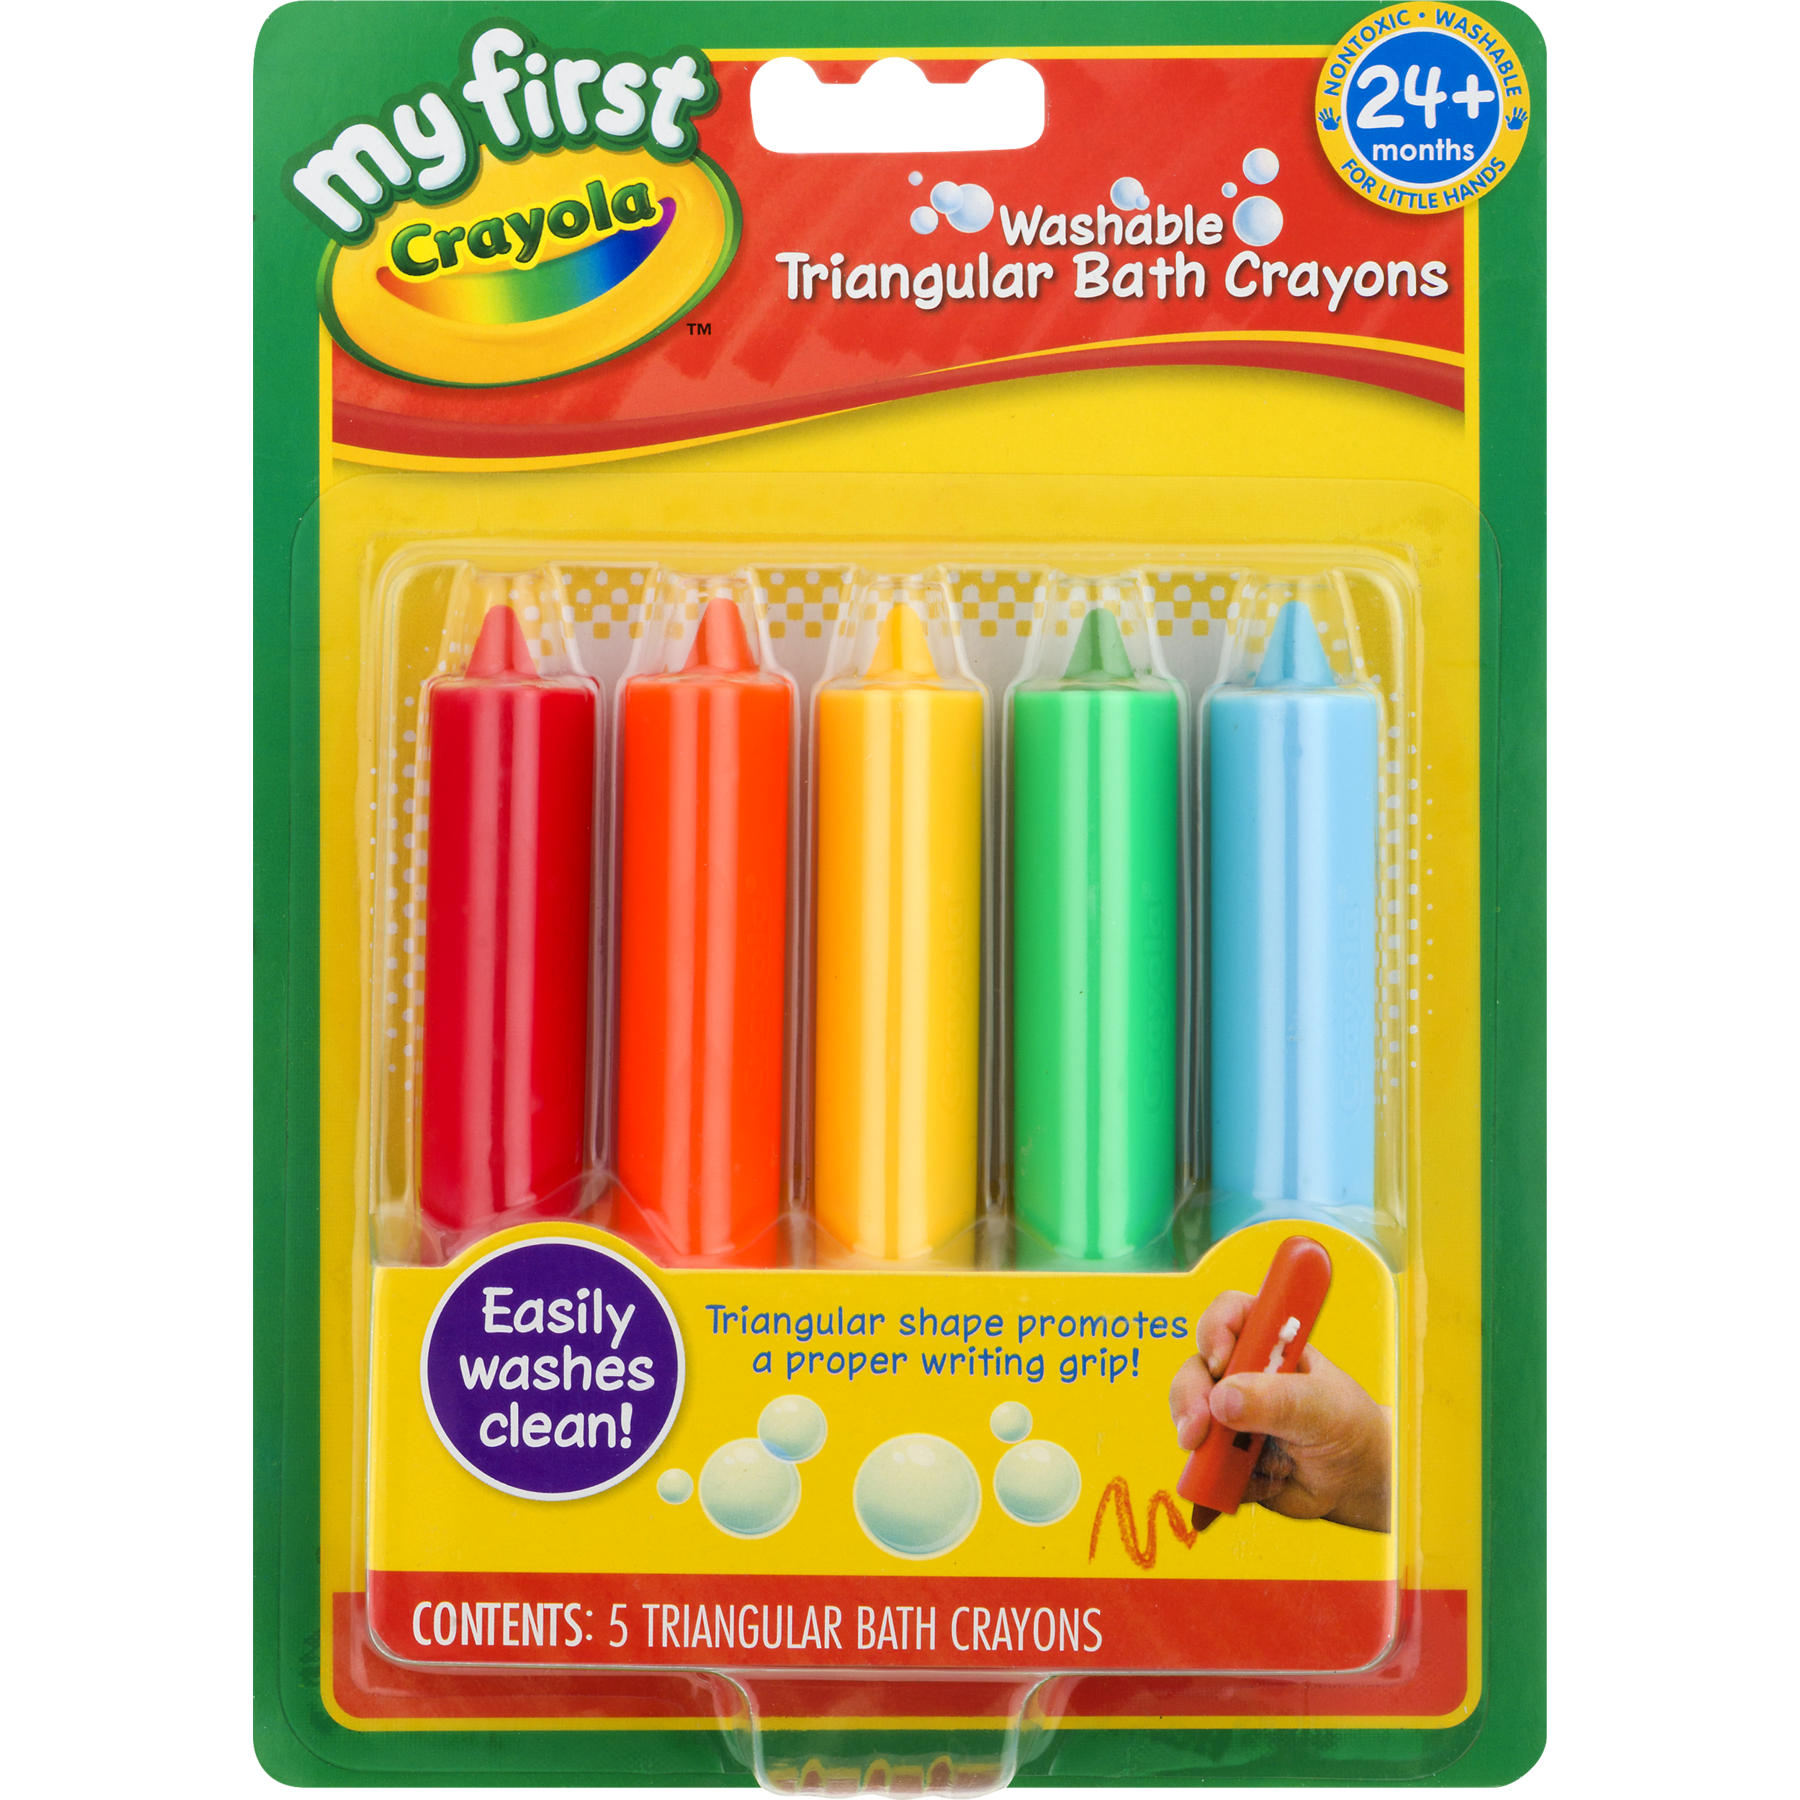 Nuby Bath Crayons - 5 Pack